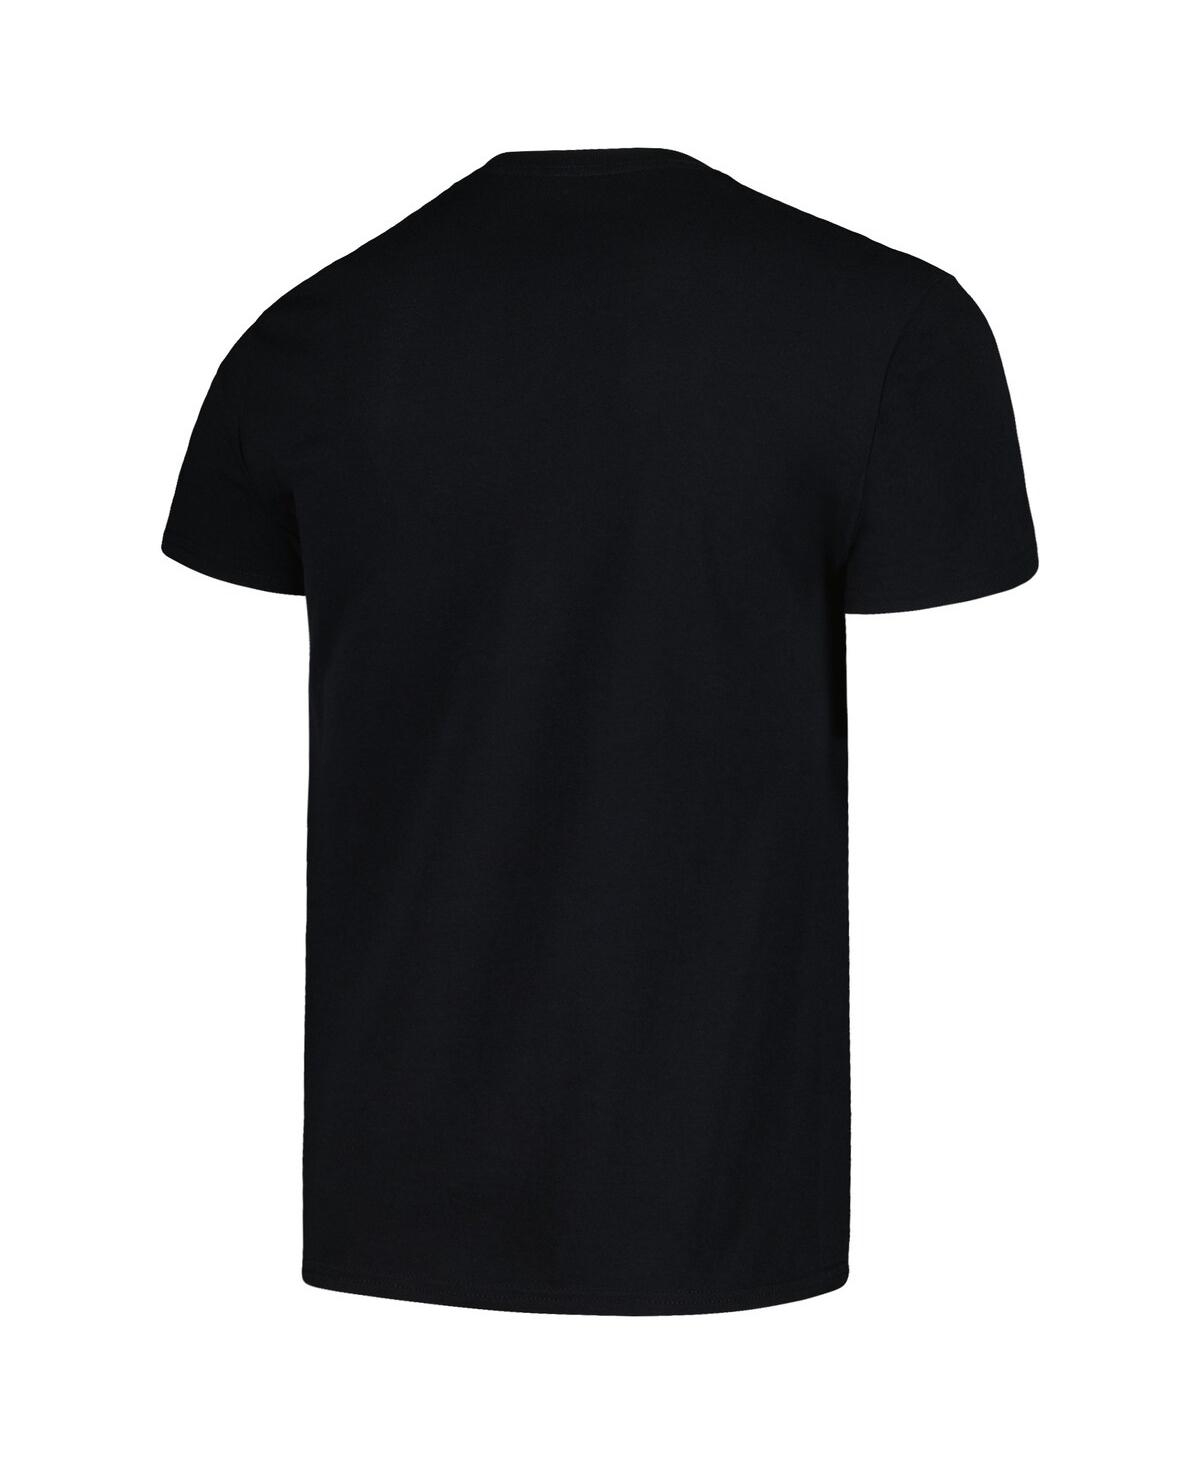 Shop Manhead Merch Men's  Black Yes Yessongs Graphic T-shirt